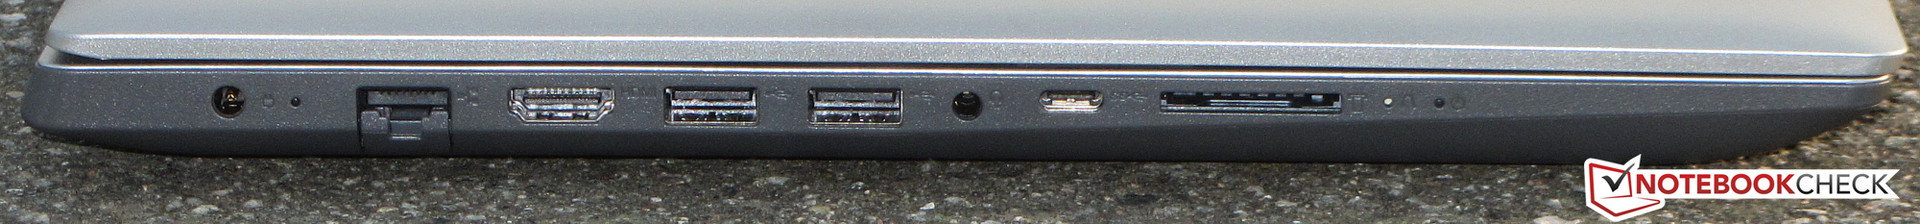 Museum krave montering Lenovo IdeaPad 320-15IKB (7200U, 940MX, FHD) Laptop Review -  NotebookCheck.net Reviews